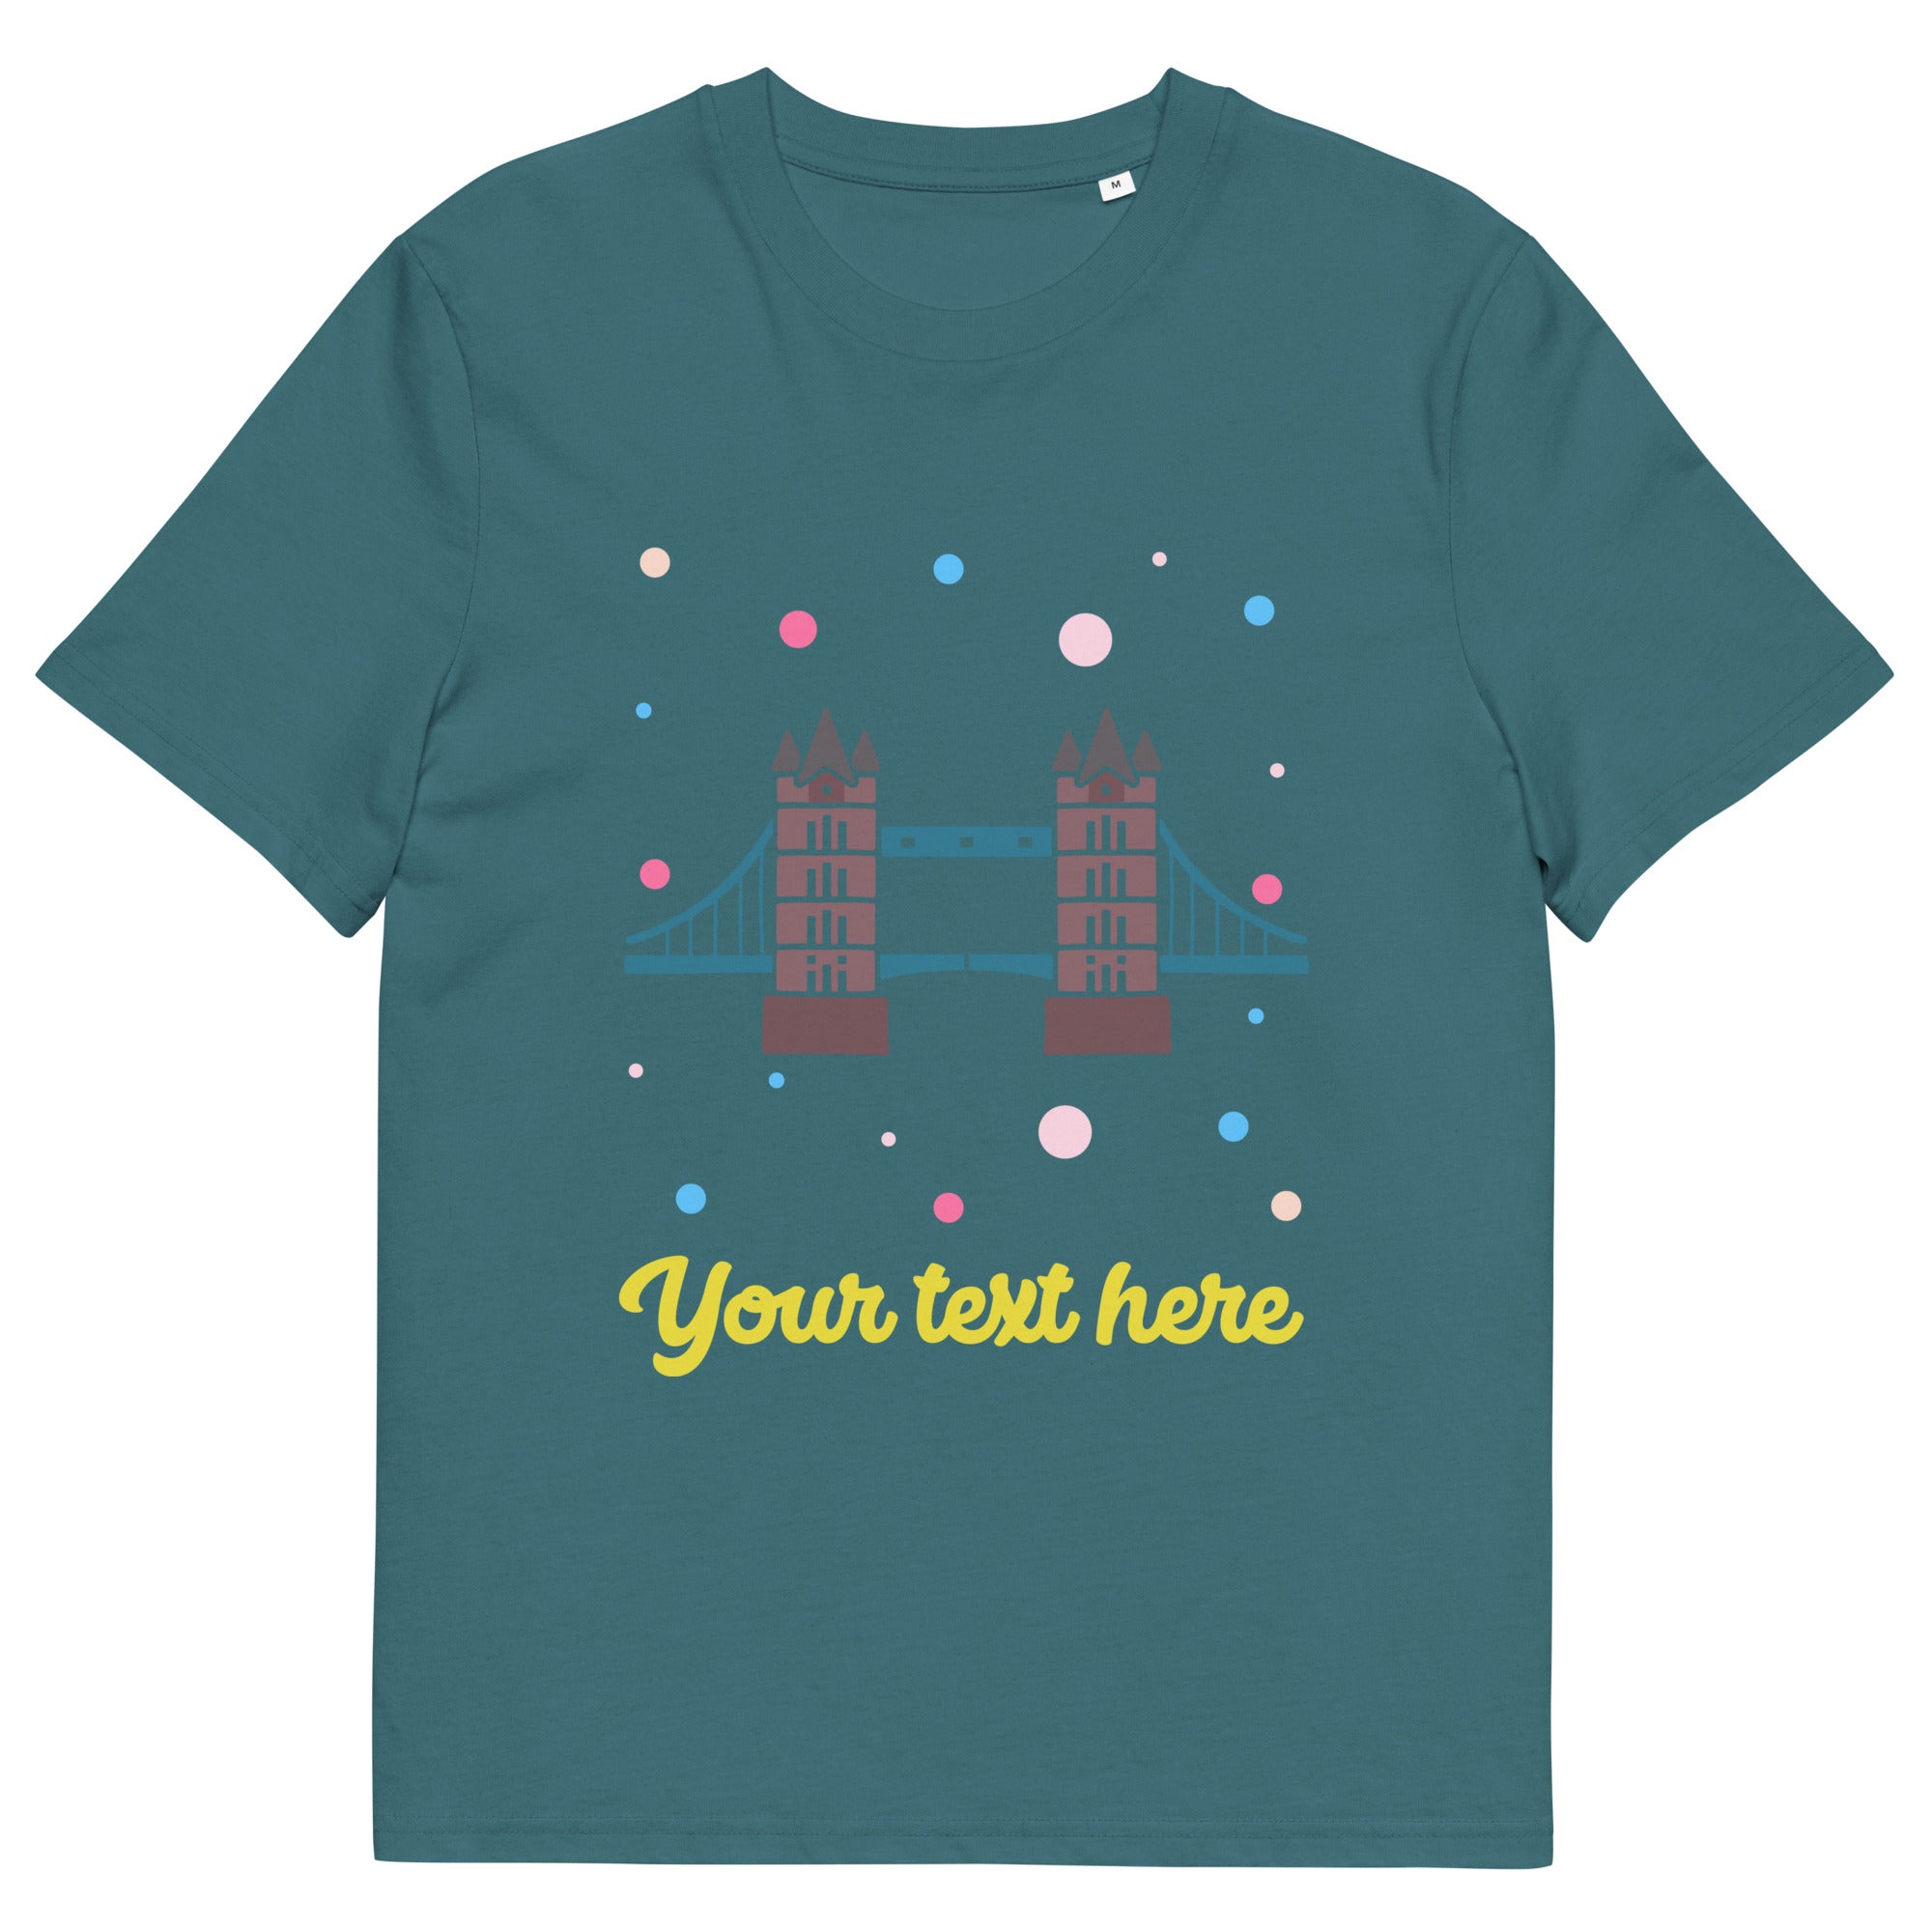 Personalised Custom Text - Organic Cotton Adults Unisex T-Shirt - London Doodles - Tower Bridge - Stargazer